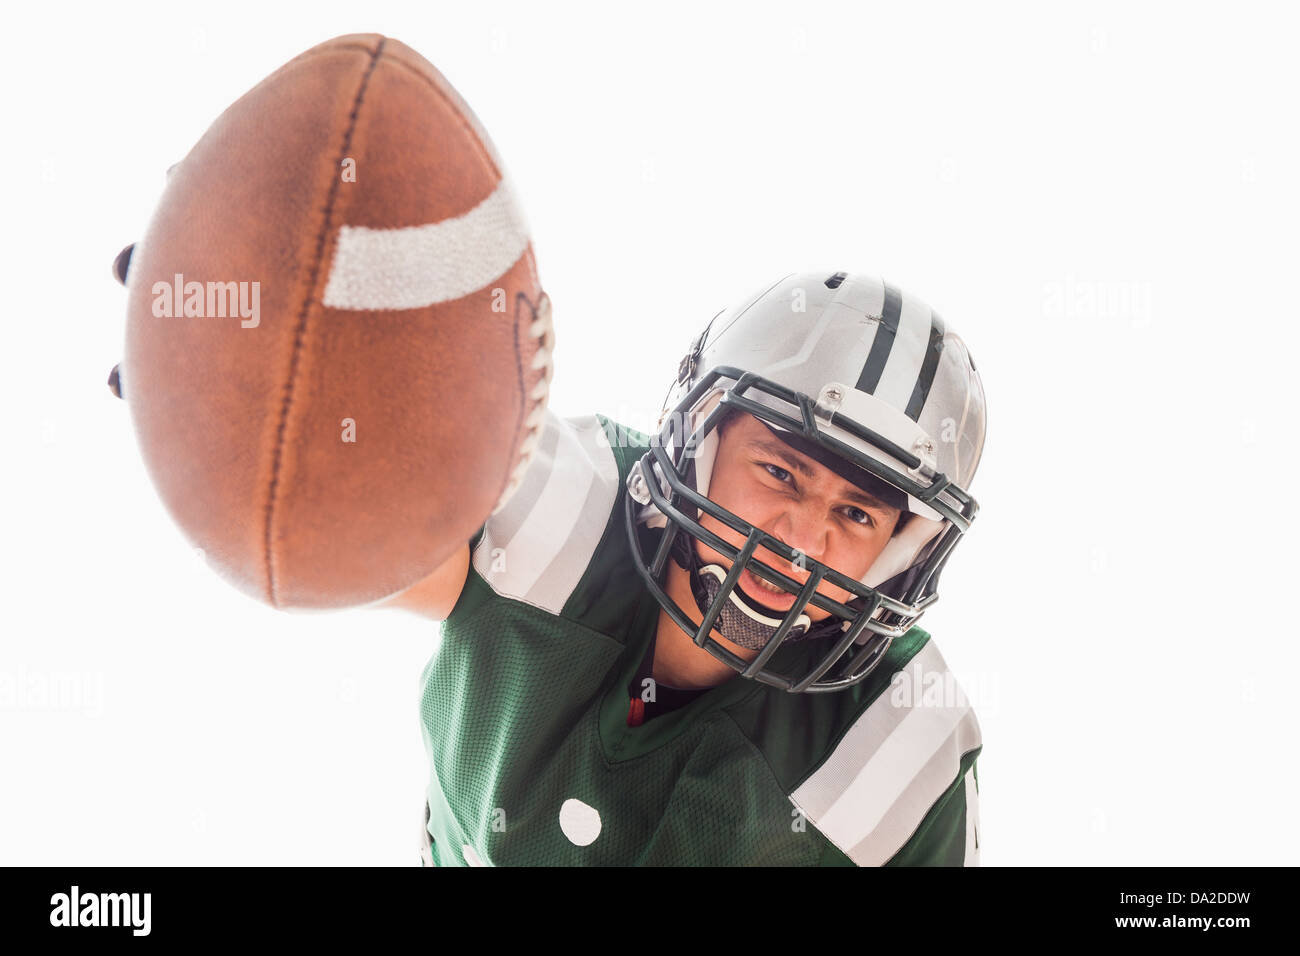 Portrait of American football player Stock Photo